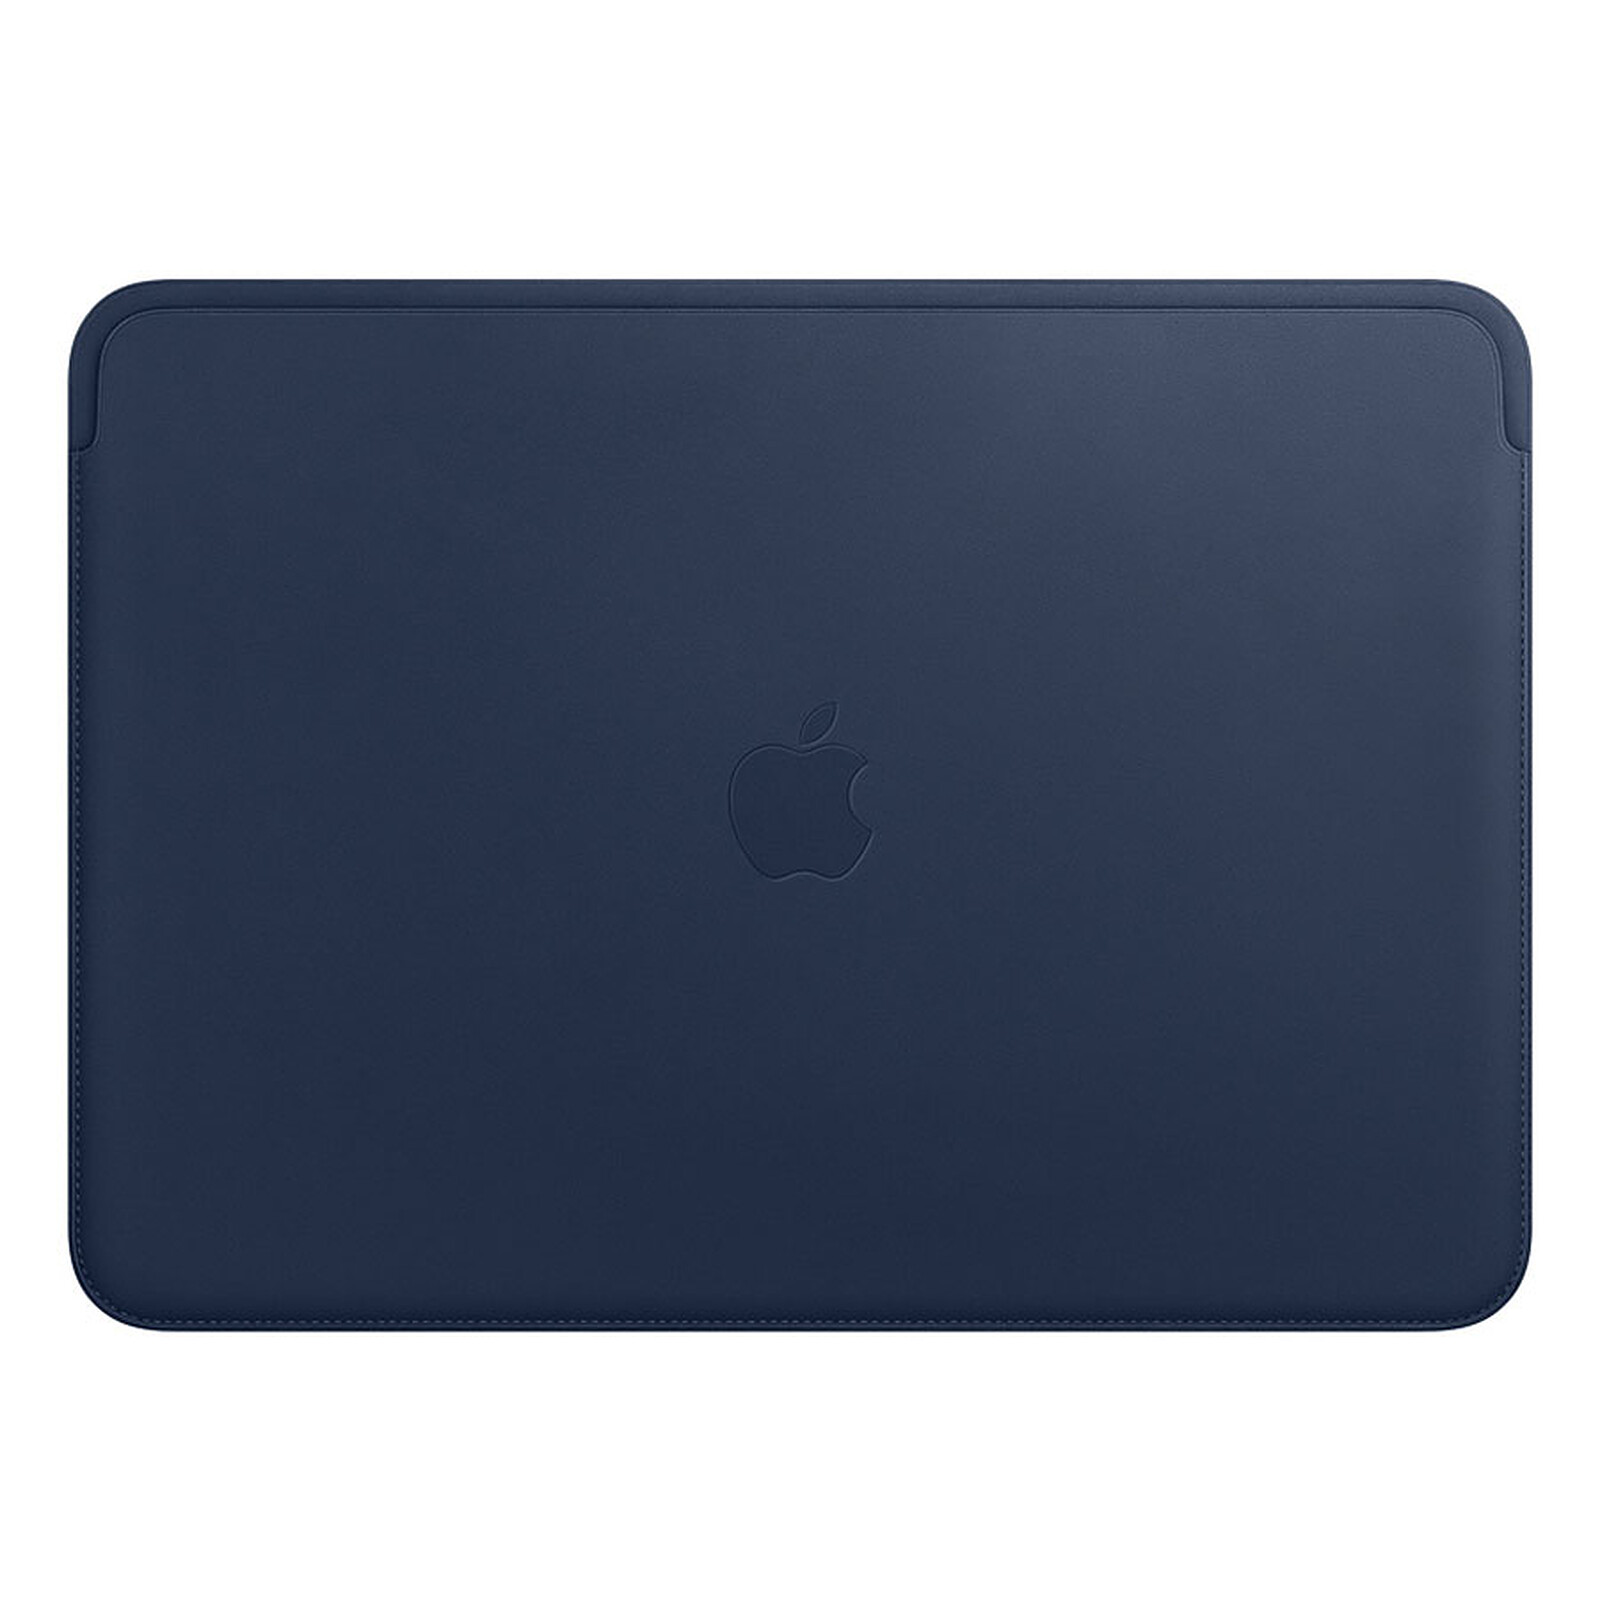 Apple Housse Cuir MacBook Pro 15 Bleu nuit - Sac, sacoche, housse -  Garantie 3 ans LDLC